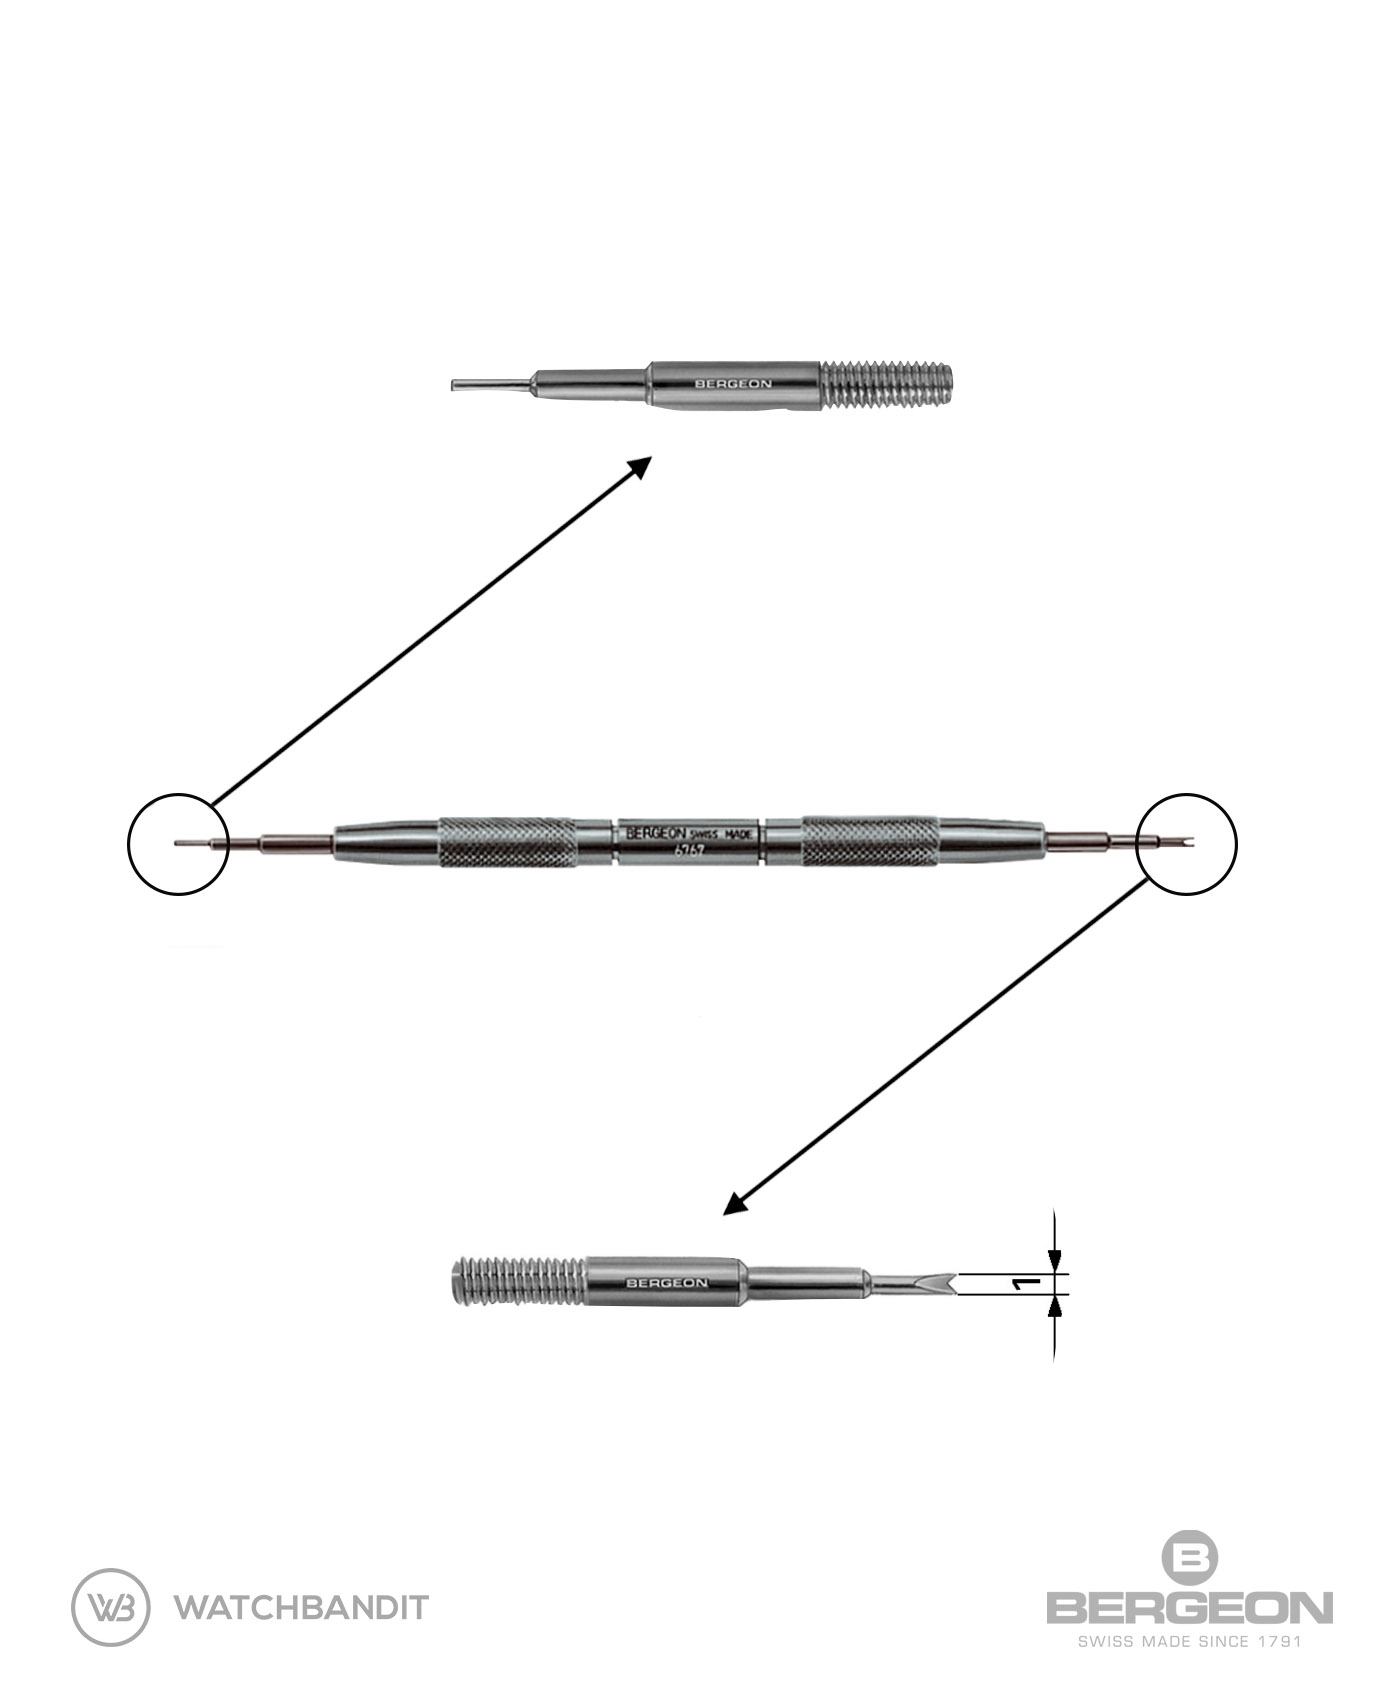 Bergeon - Spring Bar Tool - For watch straps - Made in Switzerland